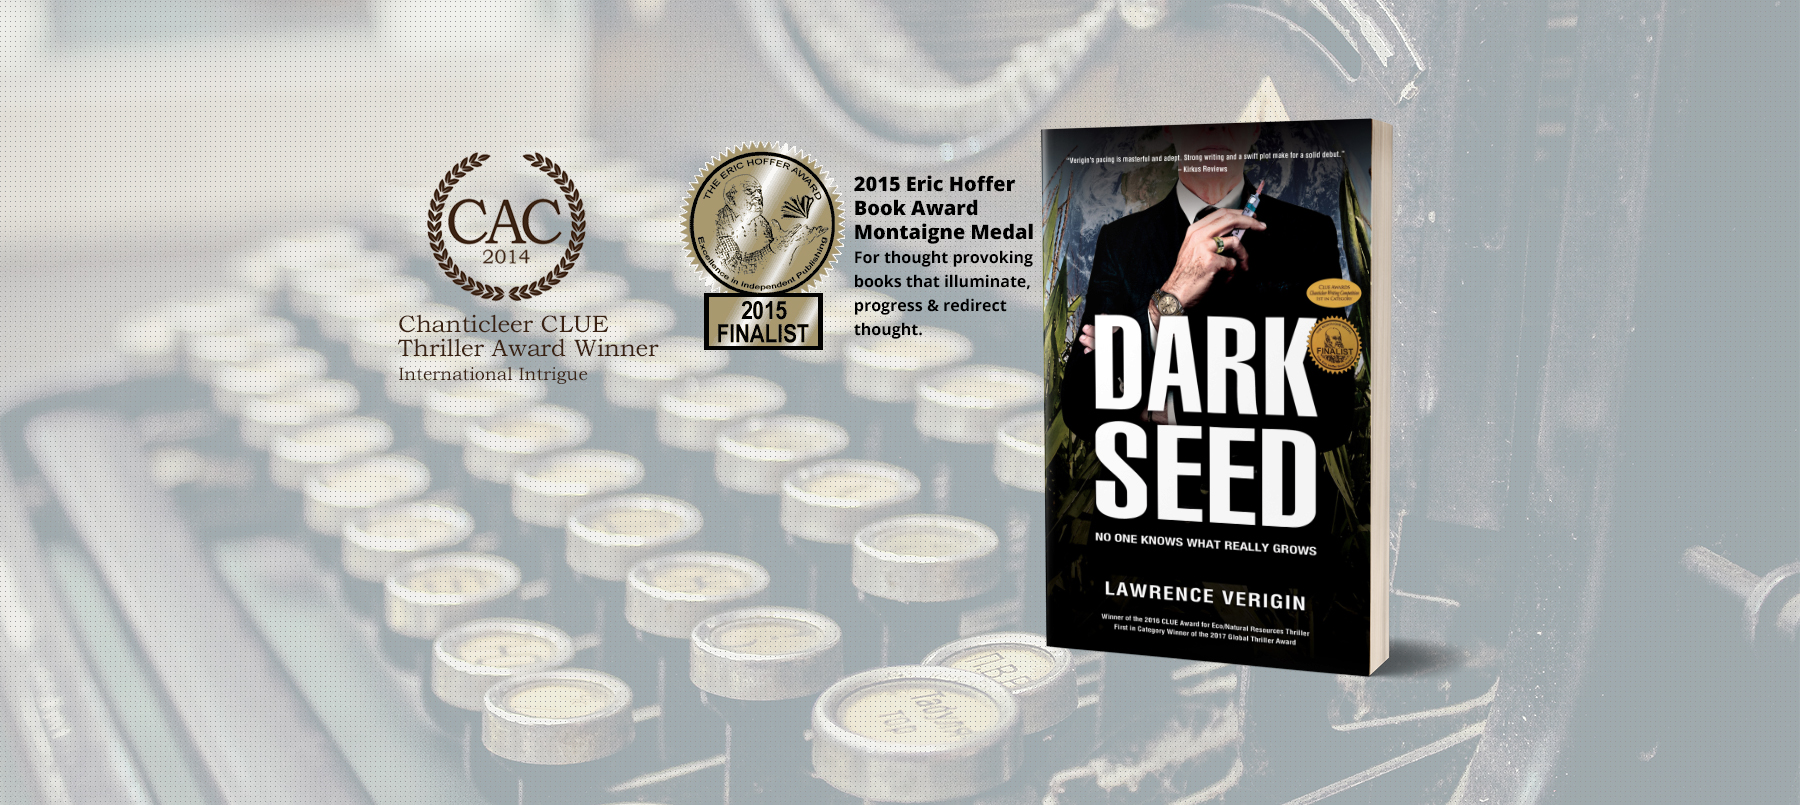 Lawrence Verigin - author of Dark Seed